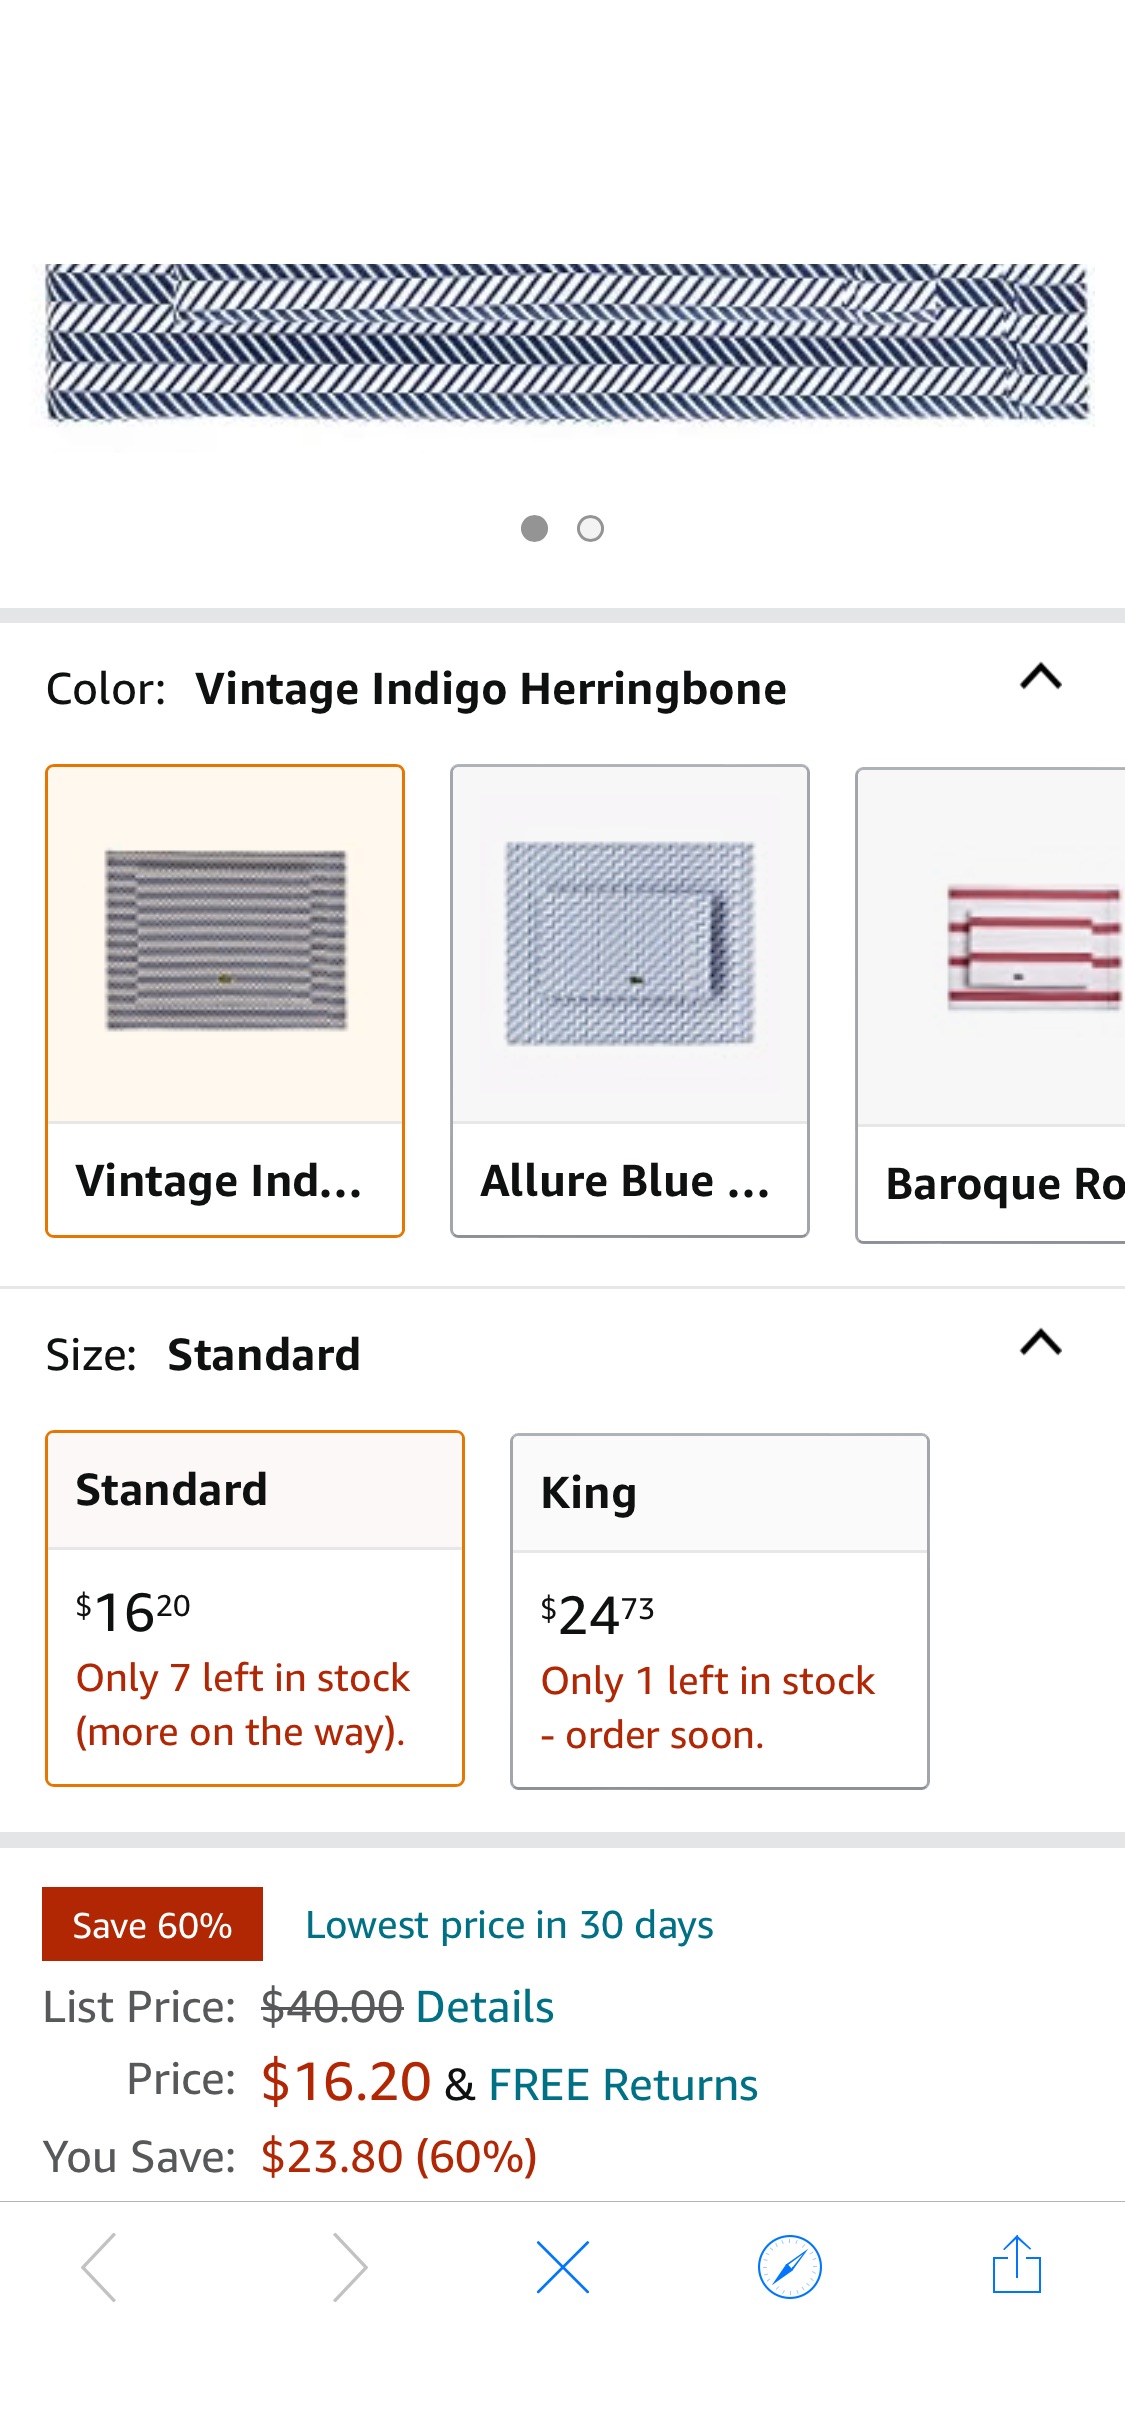 Amazon.com: Lacoste 100% Cotton Percale Pillowcase Pair, Herringbone Print, Vintage Indigo, Standard : Home & Kitchen